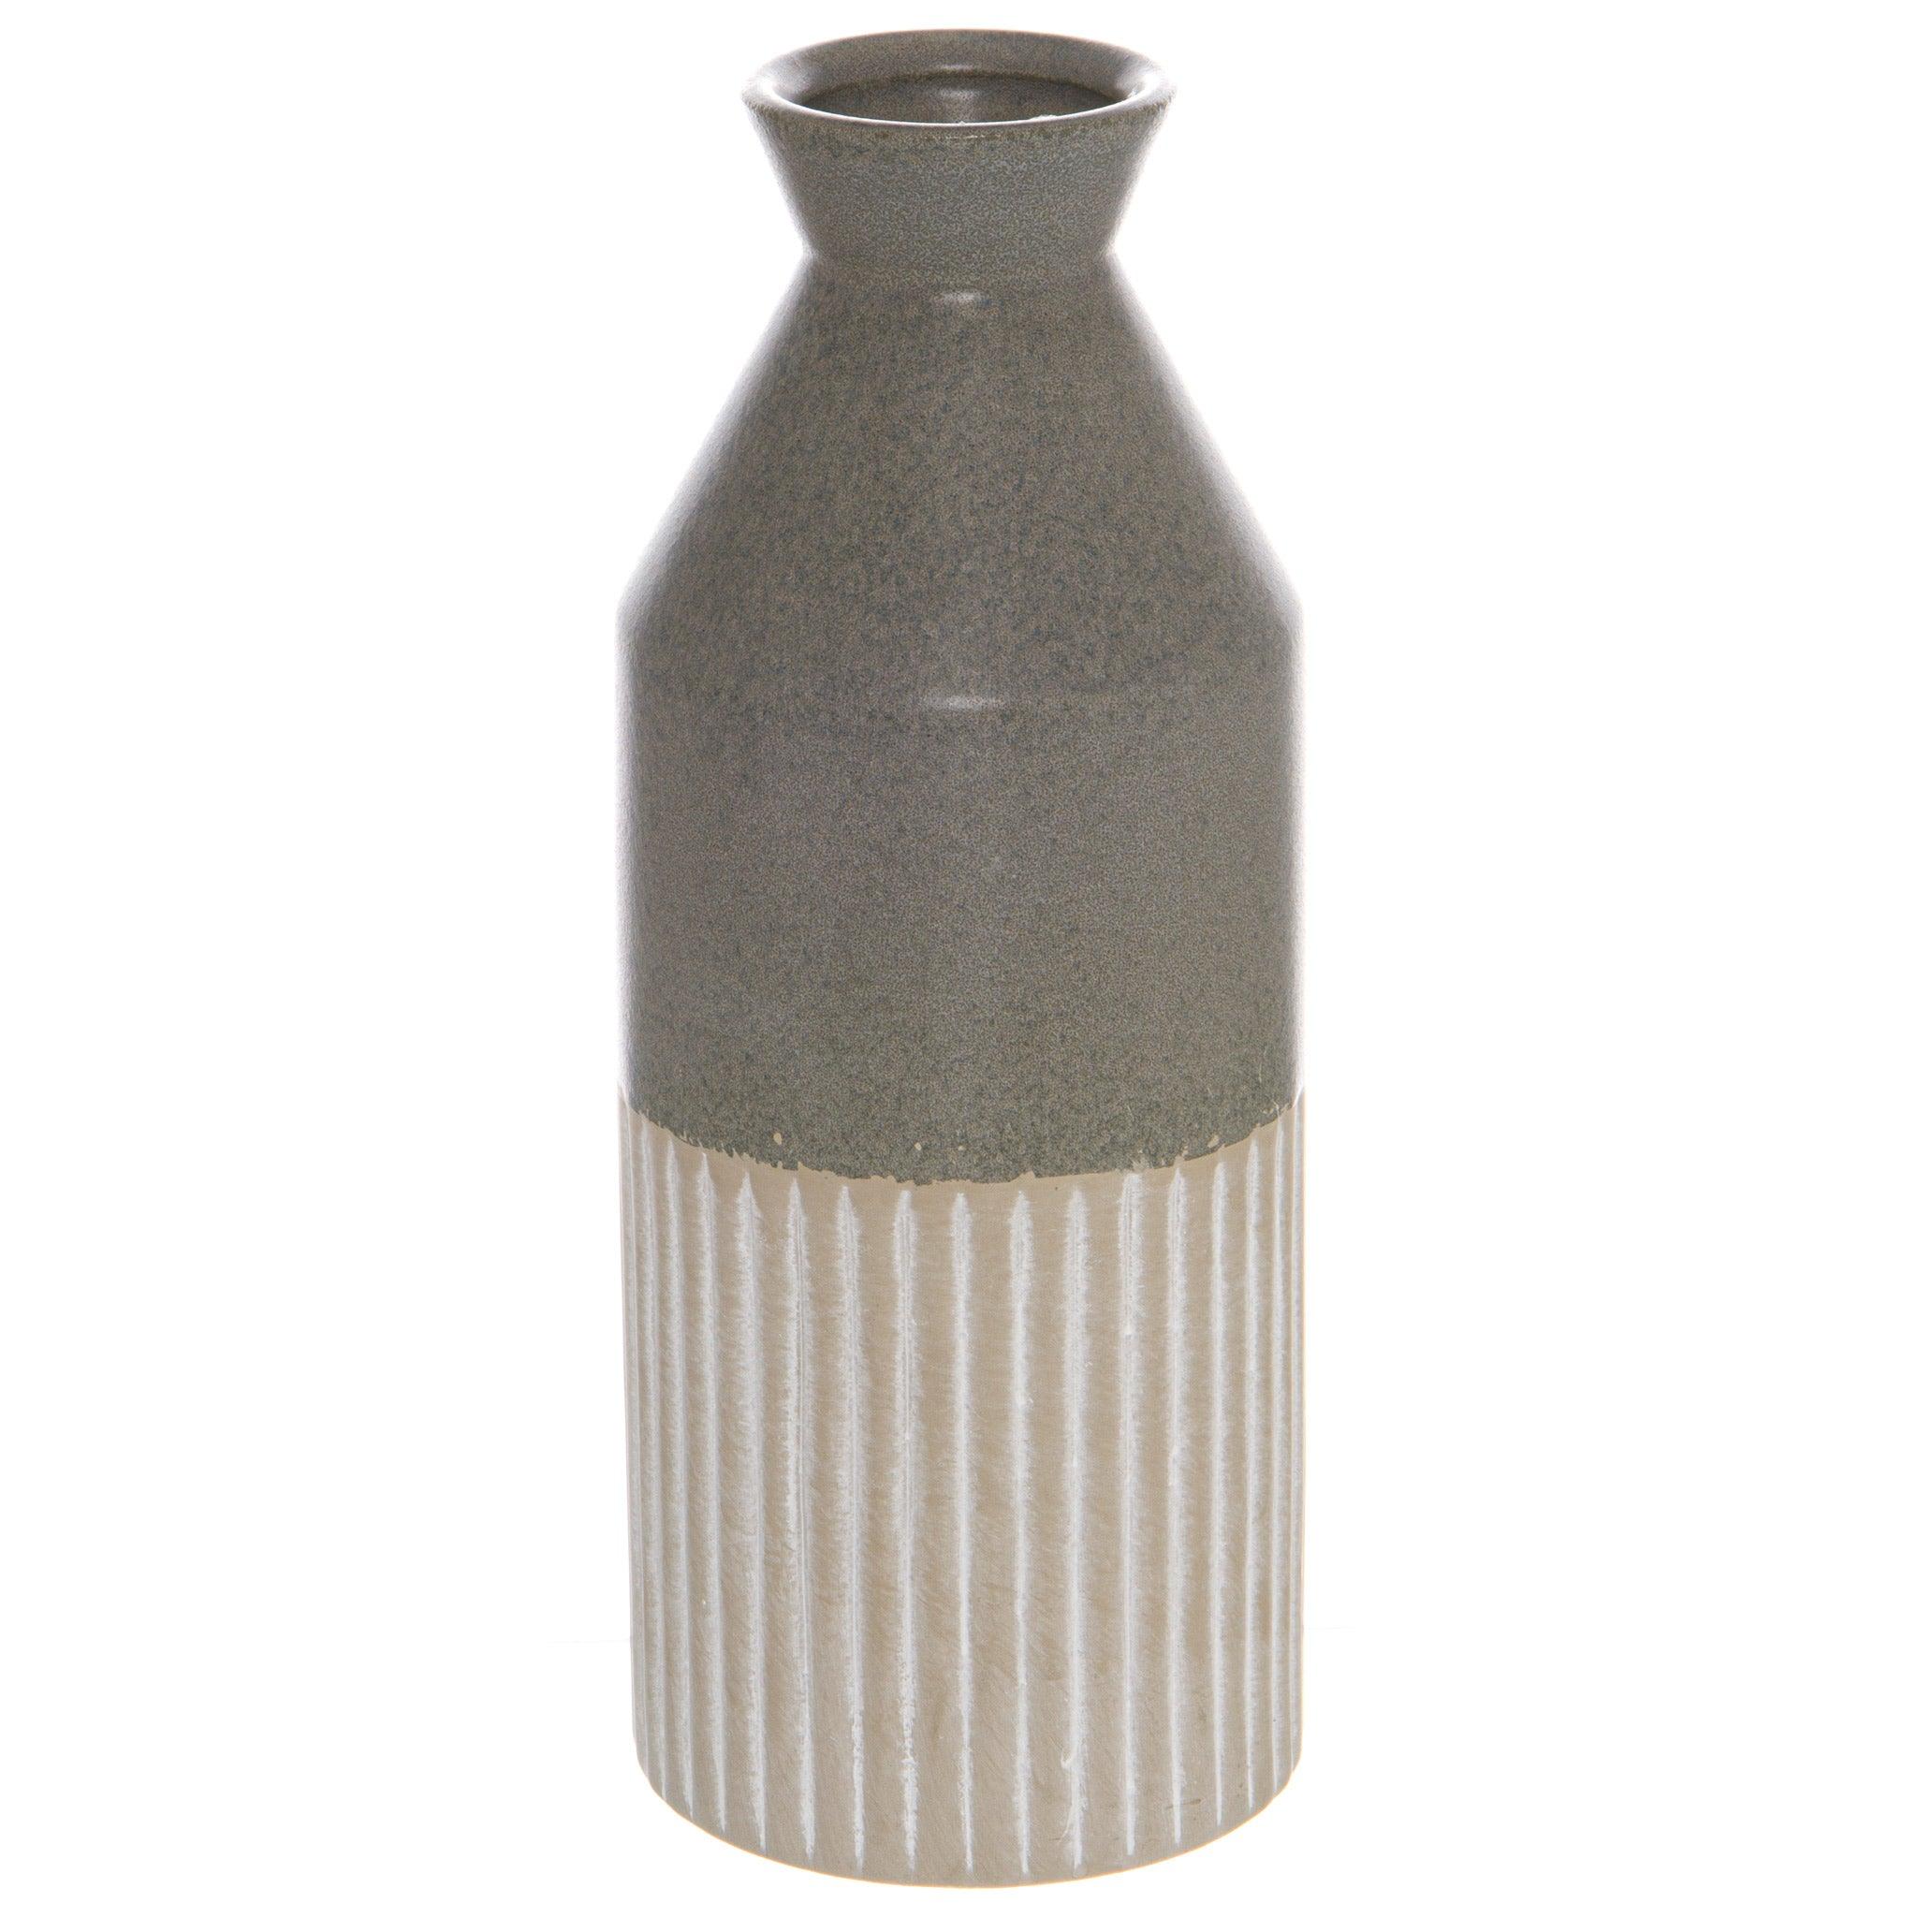 View Mason Collection Grey Ceramic Ellipse Vase information